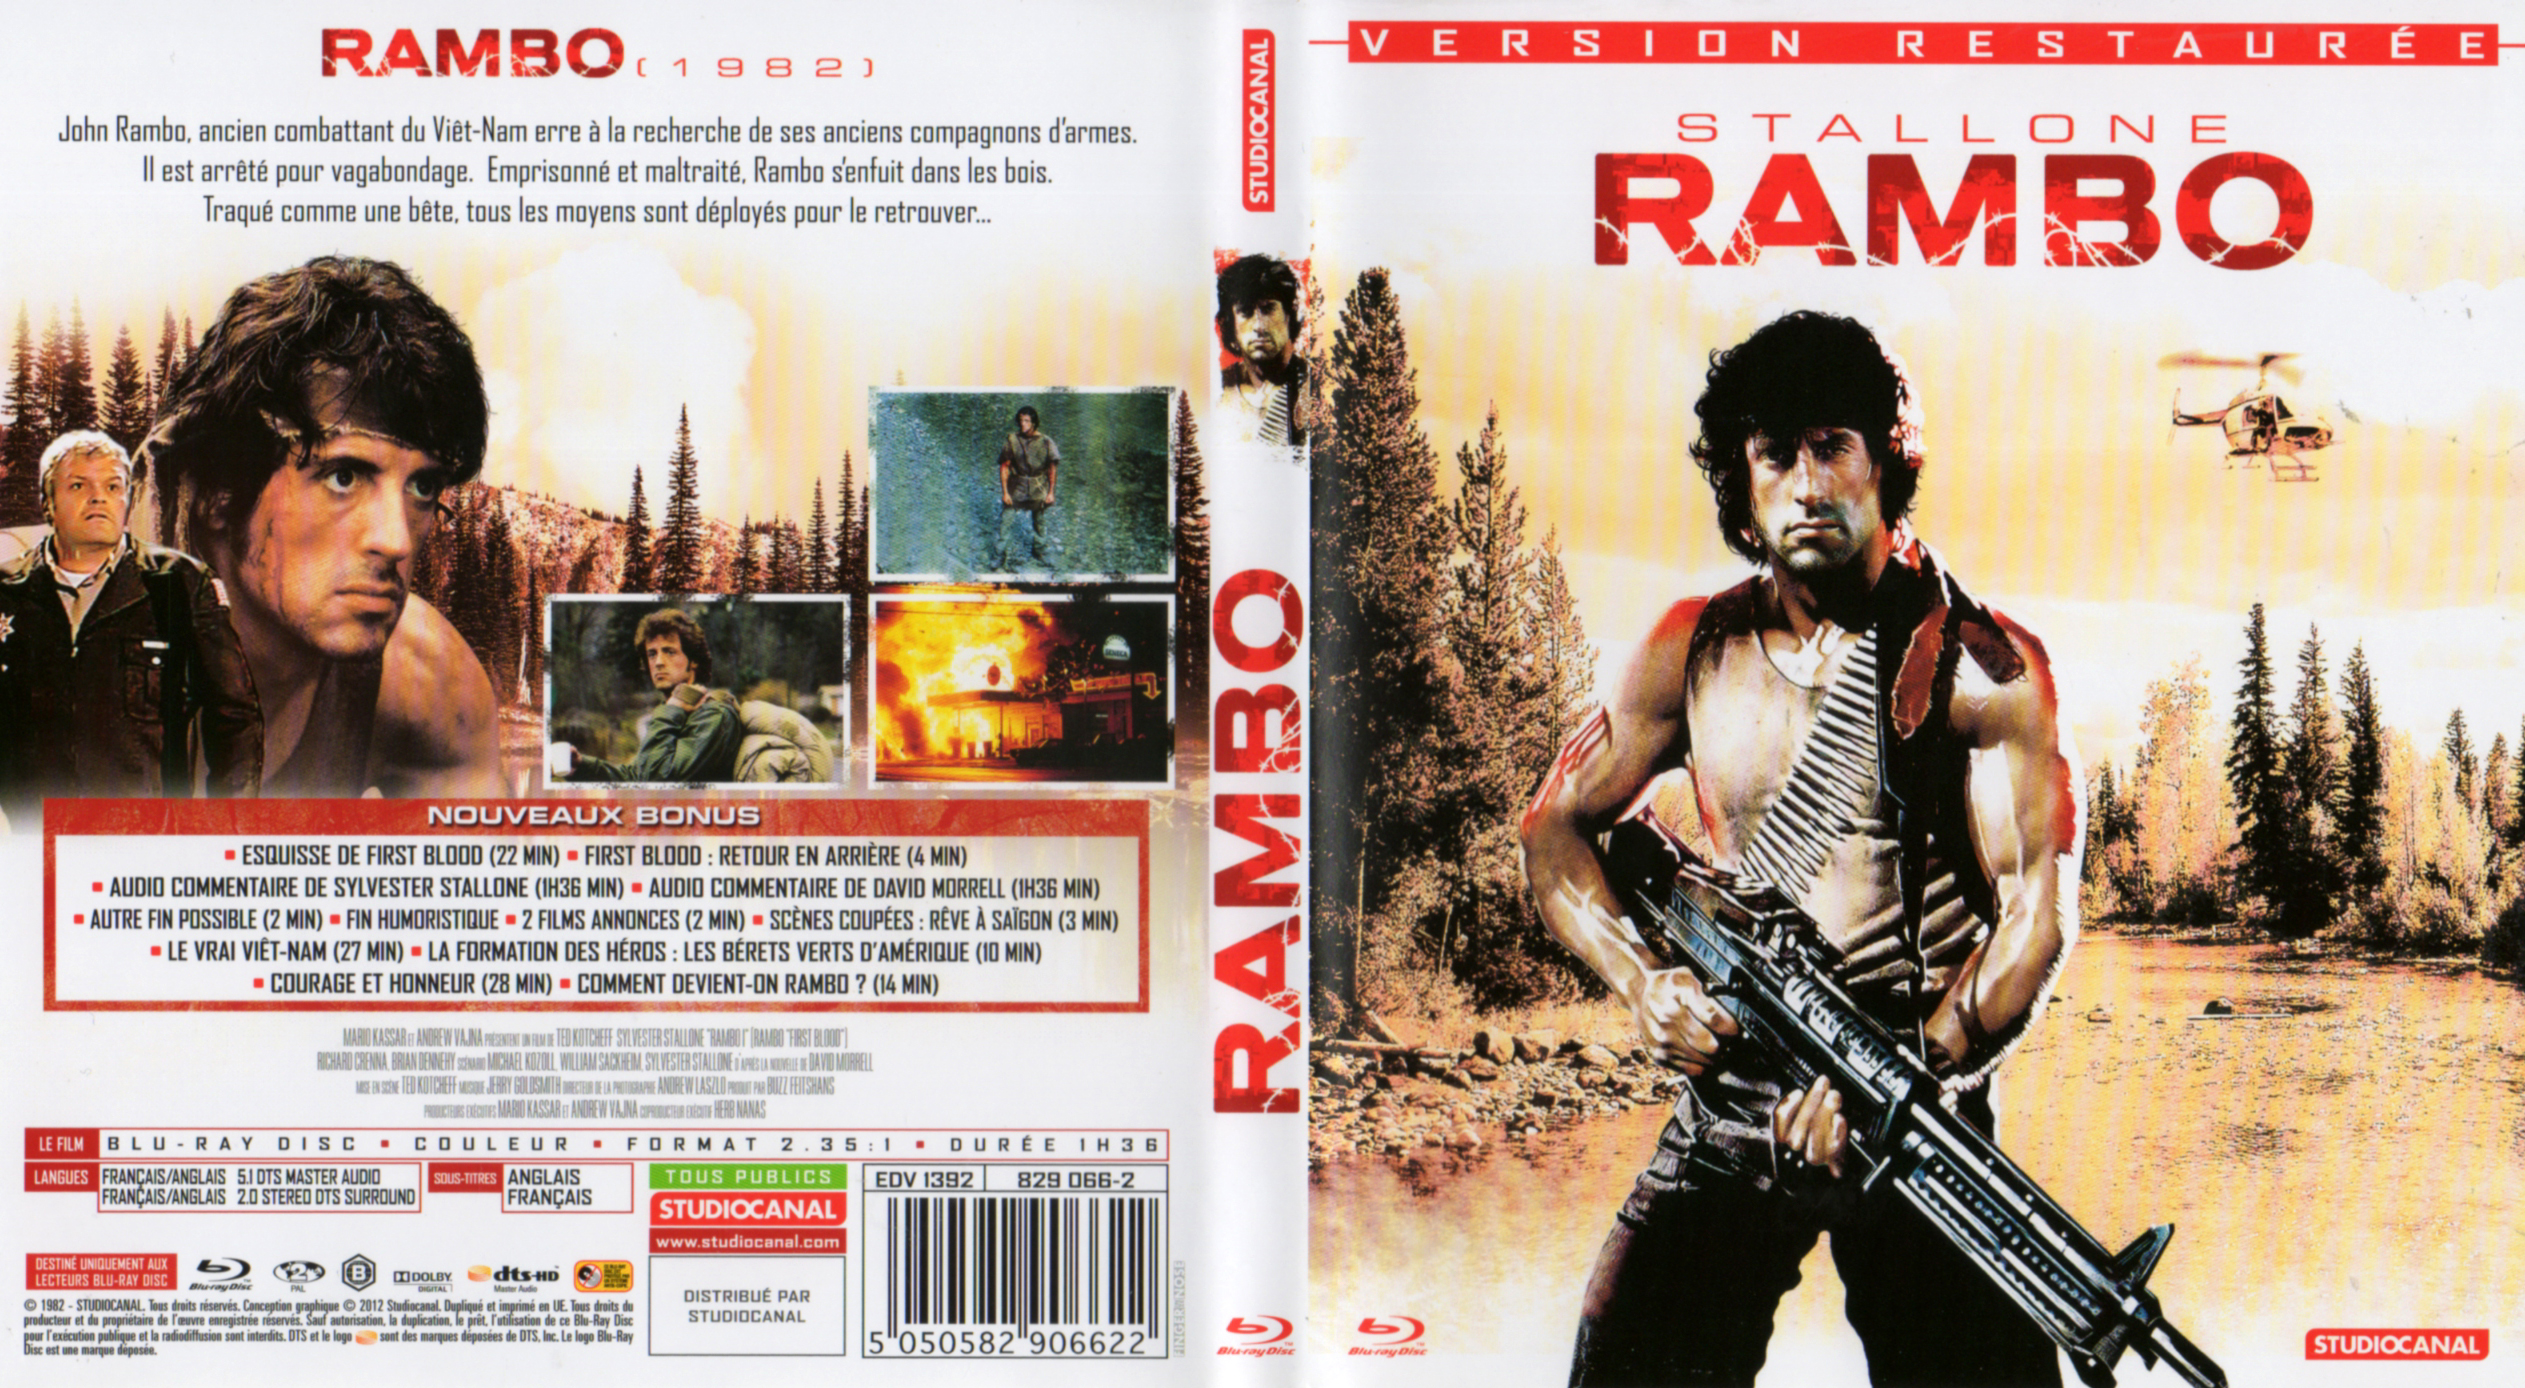 Jaquette DVD Rambo (BLU-RAY) v2